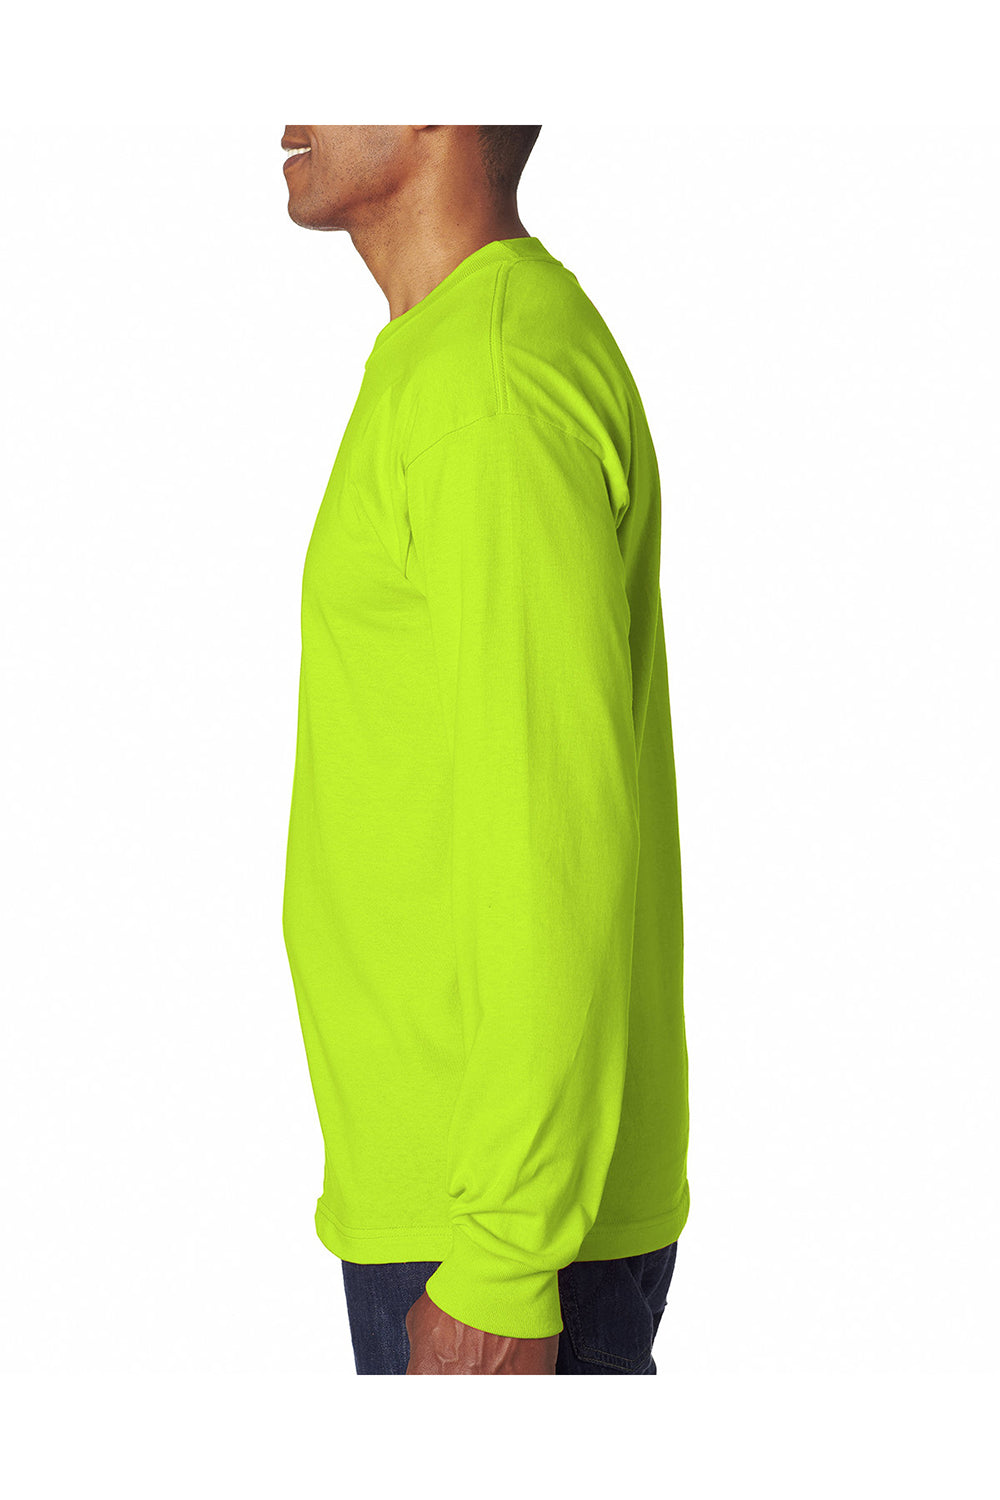 Bayside BA6100 Mens USA Made Long Sleeve Crewneck T-Shirt Lime Green Model Side